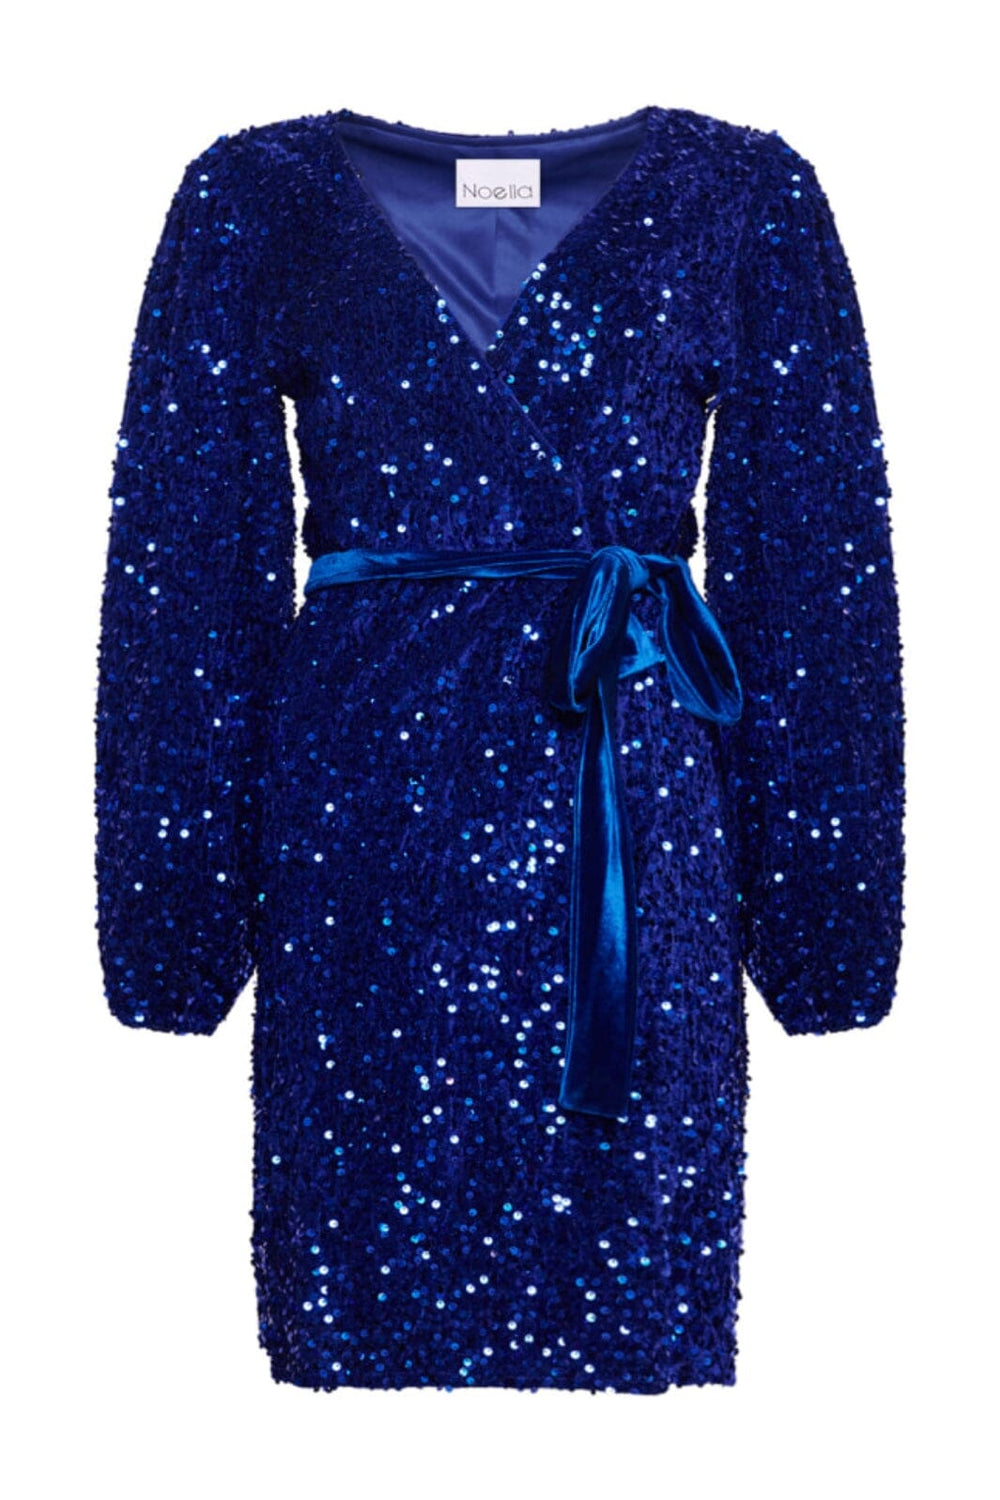 Noella - Teagan Wrap Dress - 535 Royal Blue Kjoler 